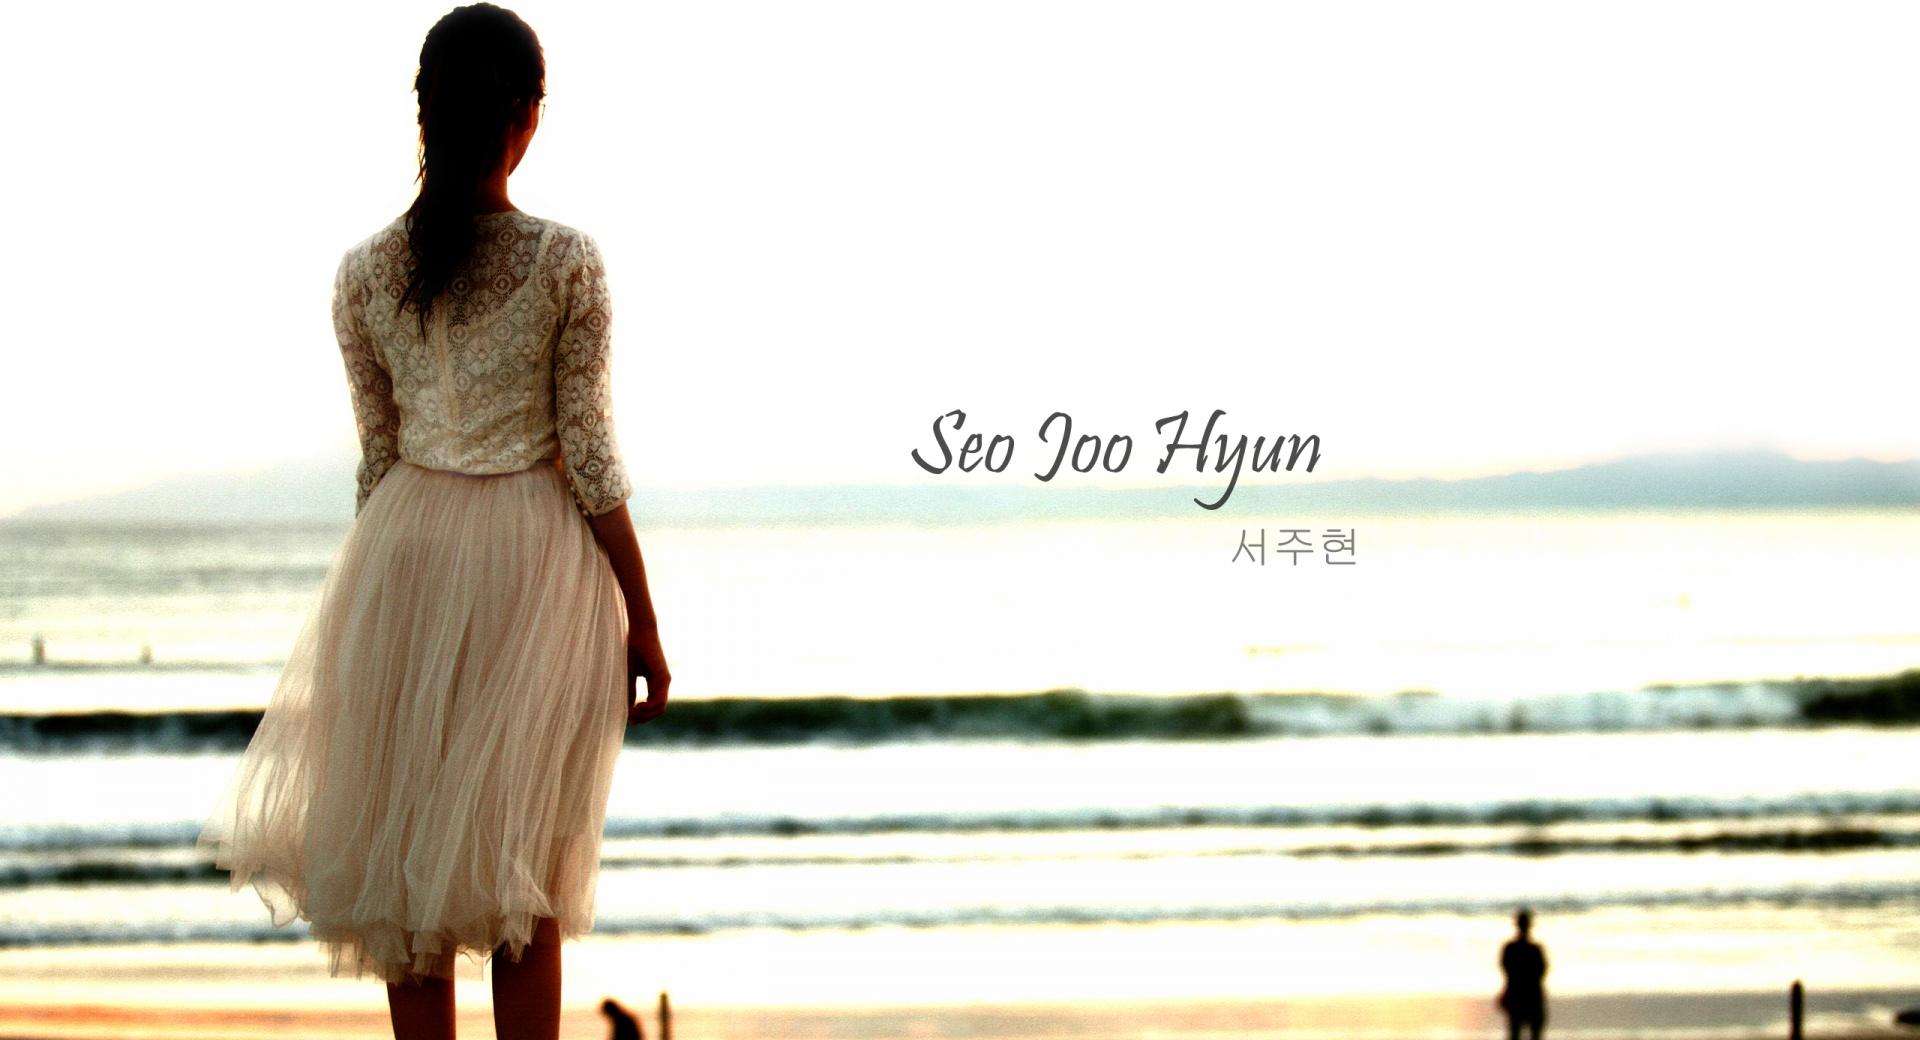 SNSD Seo Joo Hyun at 1600 x 1200 size wallpapers HD quality